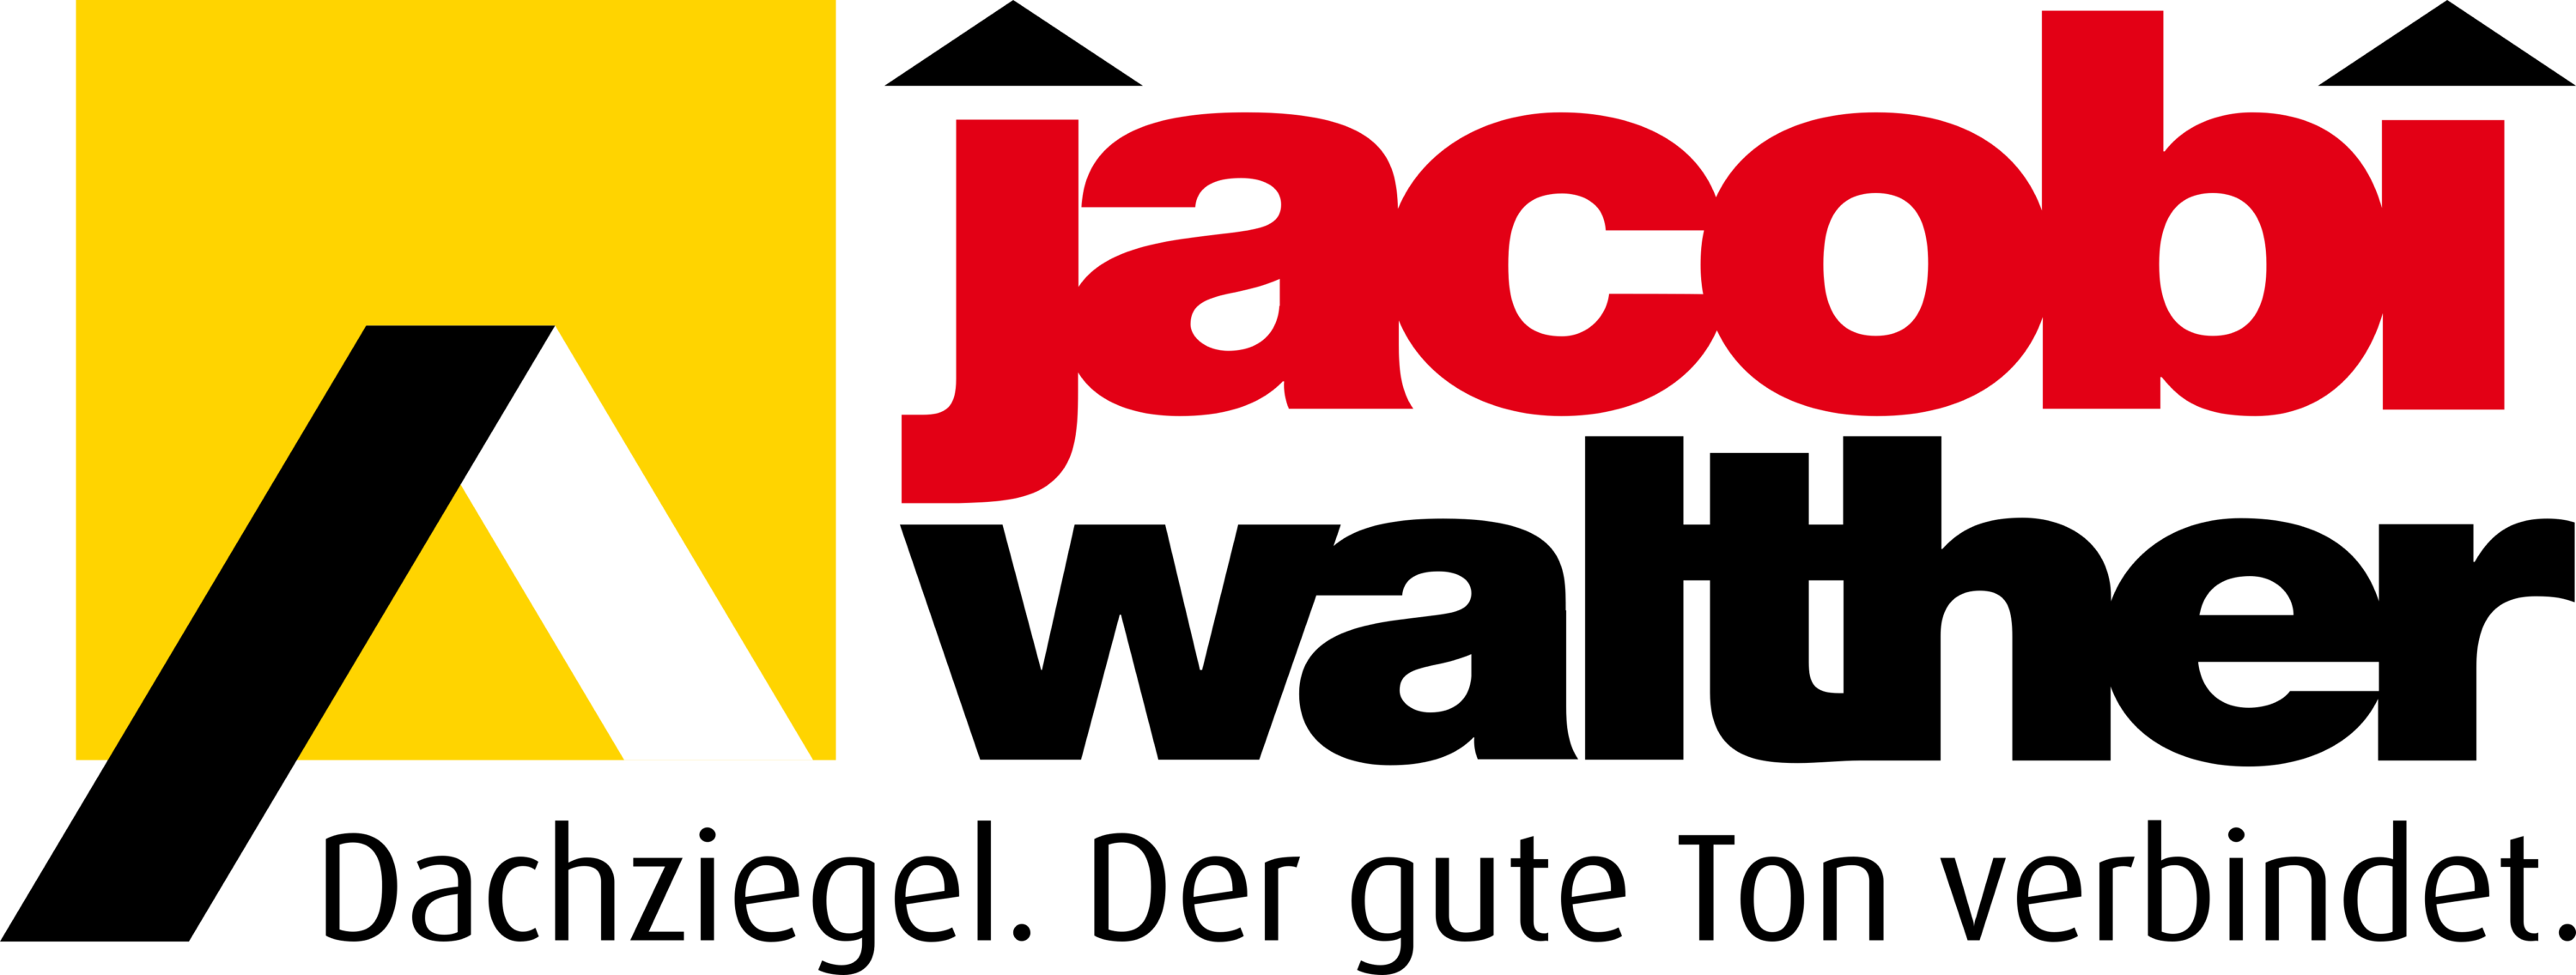 Jacobi Tonwerke GmbH Logo